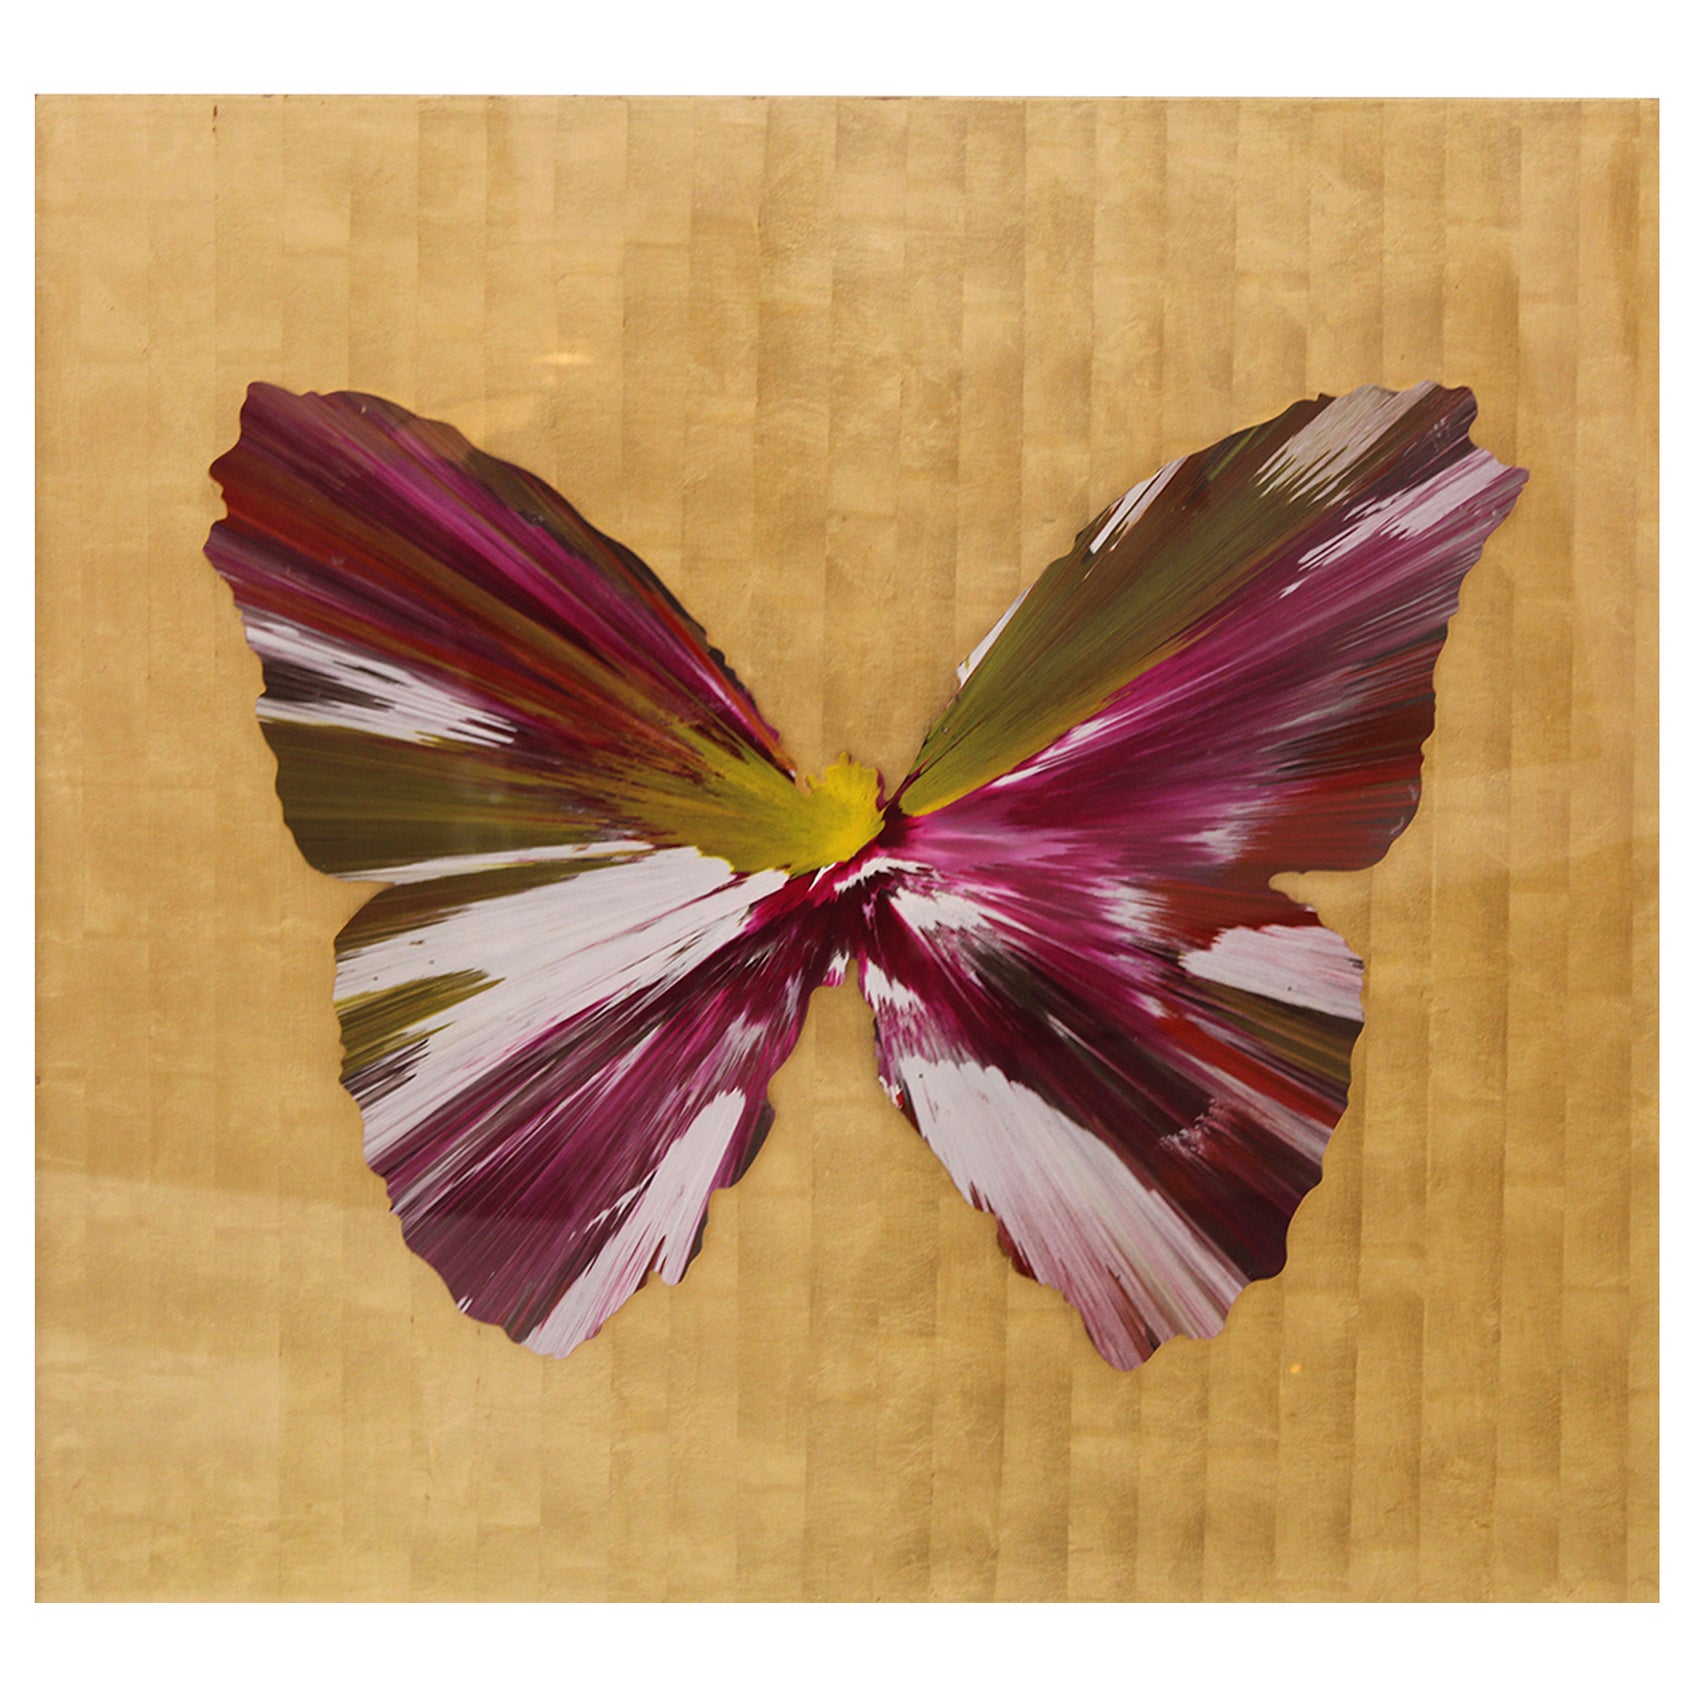  Butterfly Spin Painting 2009 Framed on 18k Gold Leaf, Damien Hirst, Artwork For Sale